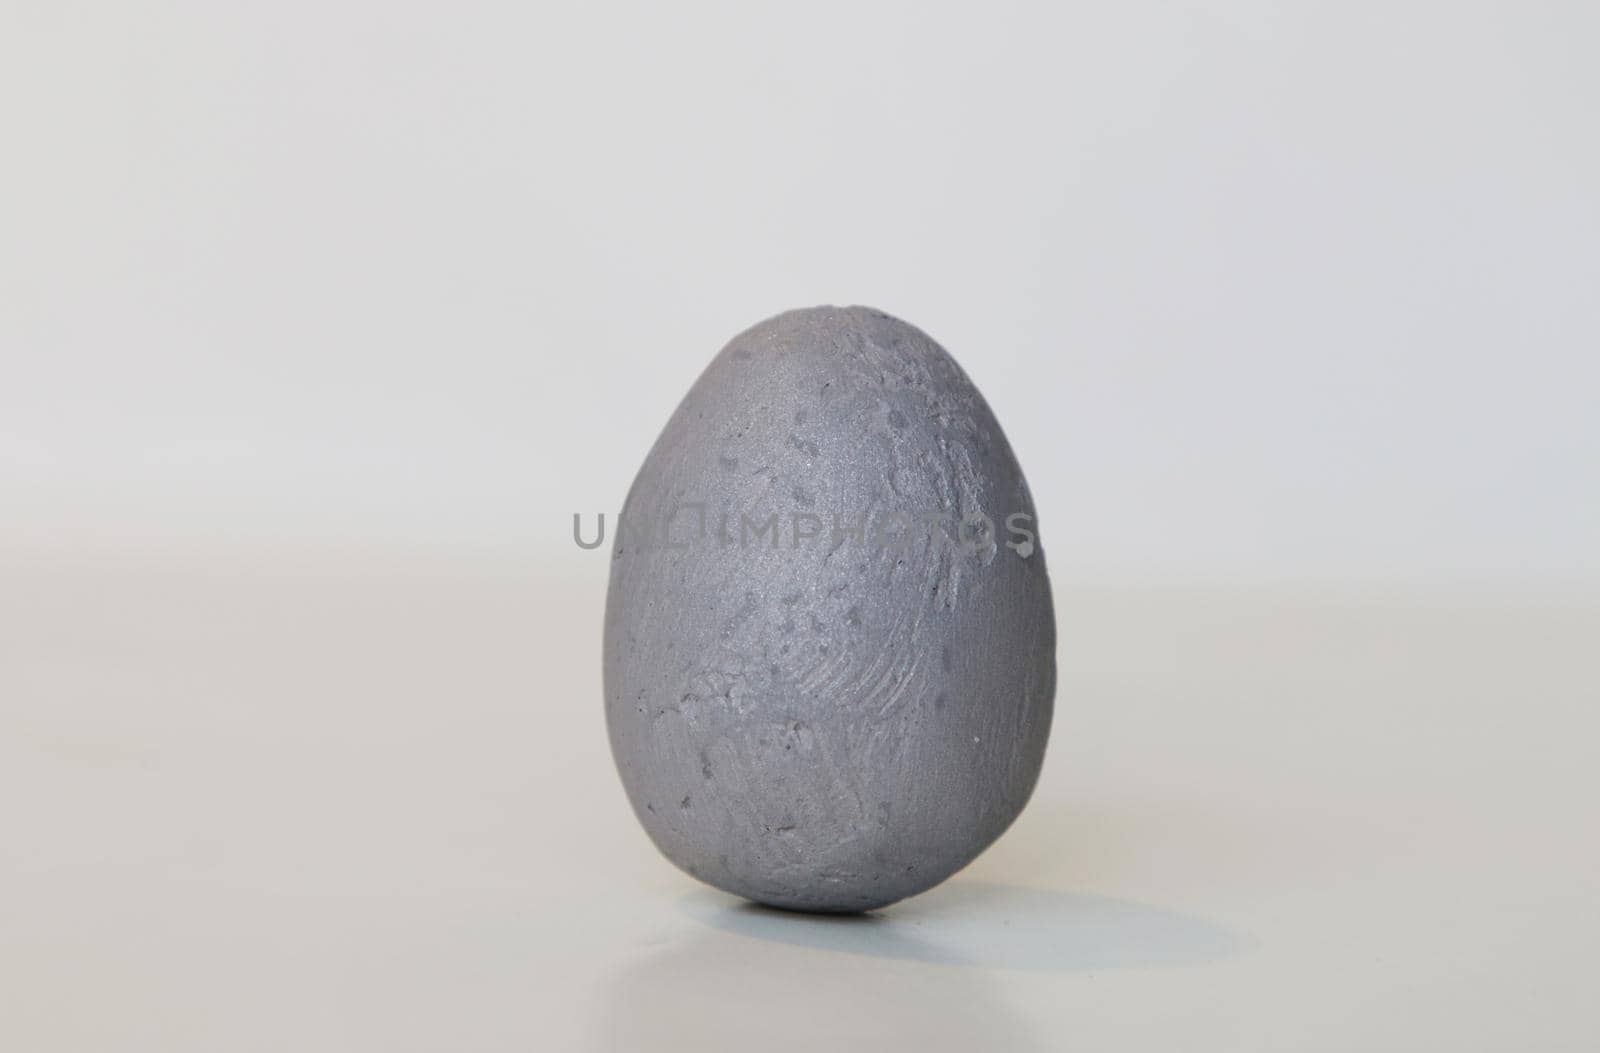 Decorative gray egg on light background. by gelog67